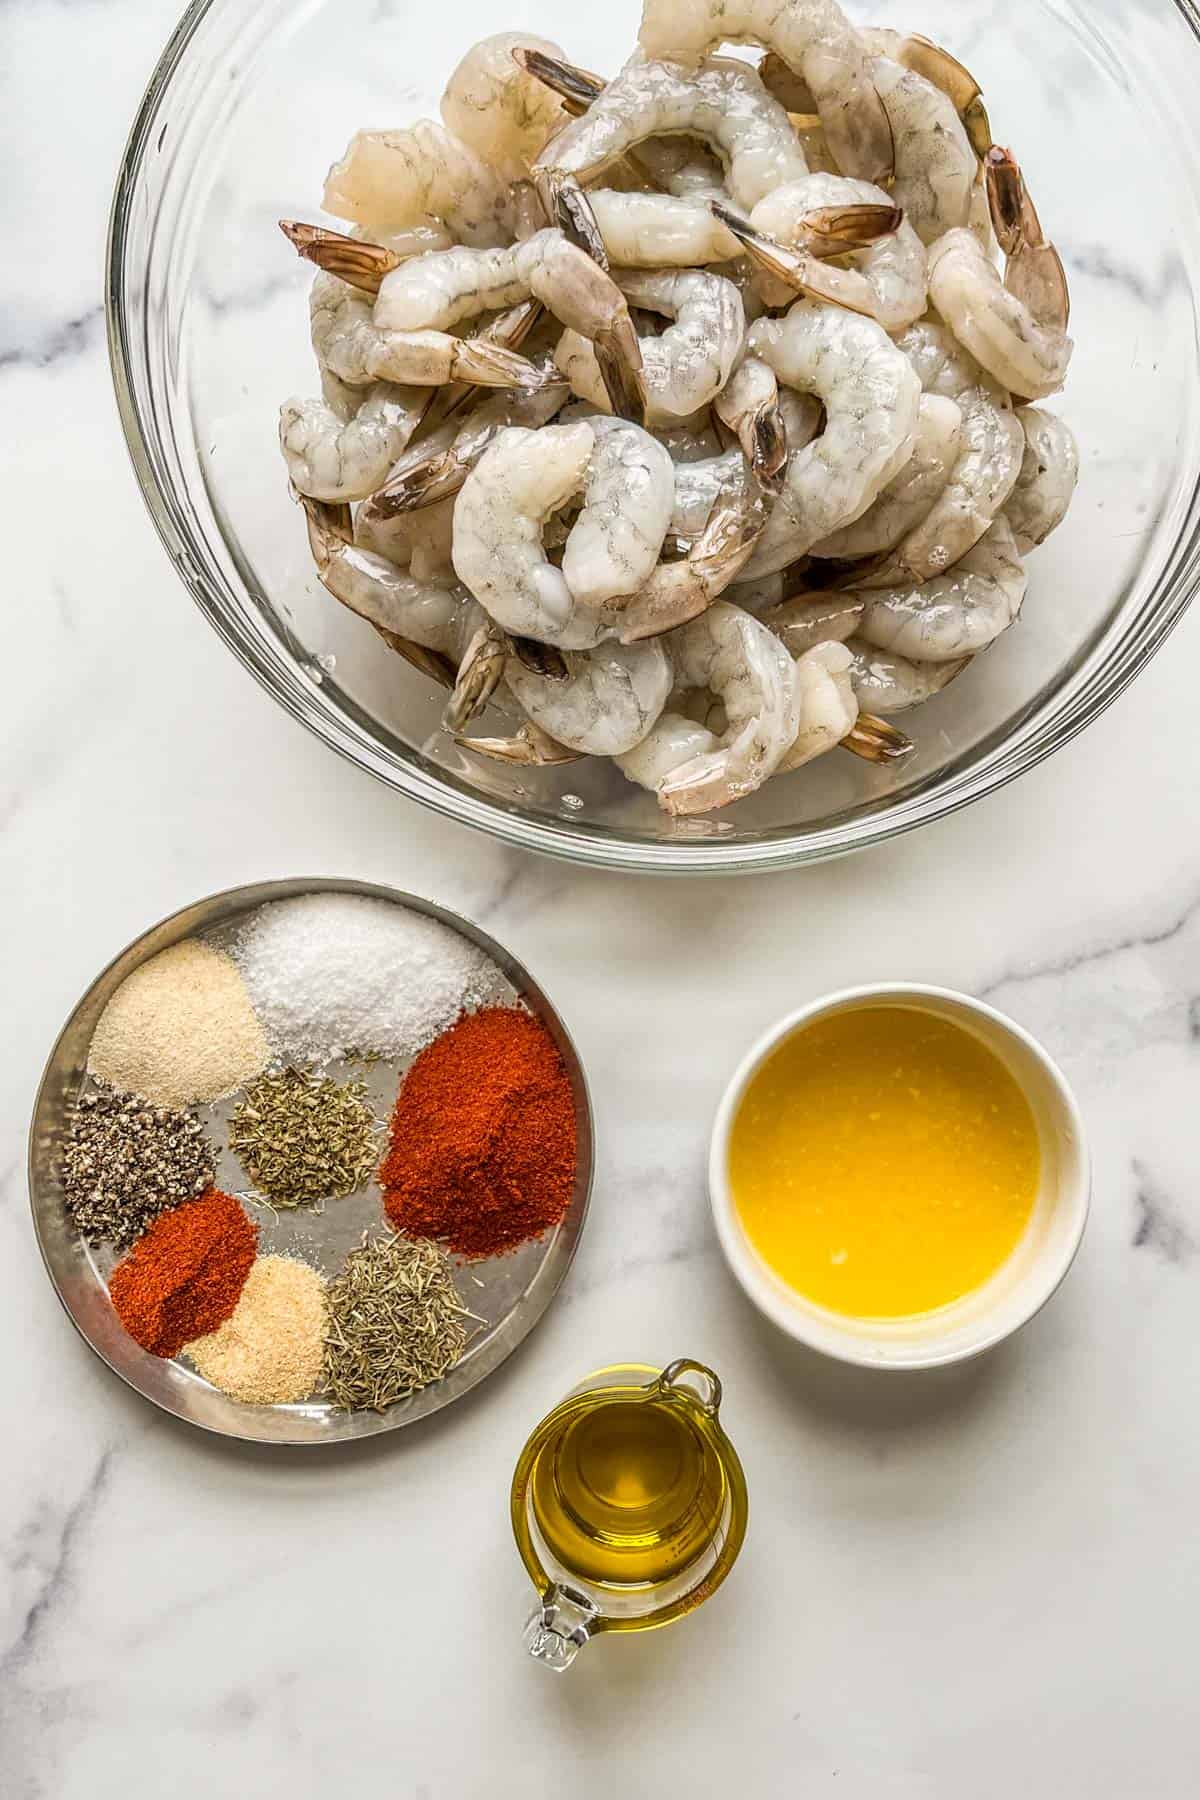 Blackened shrimp ingredients on a marble background.